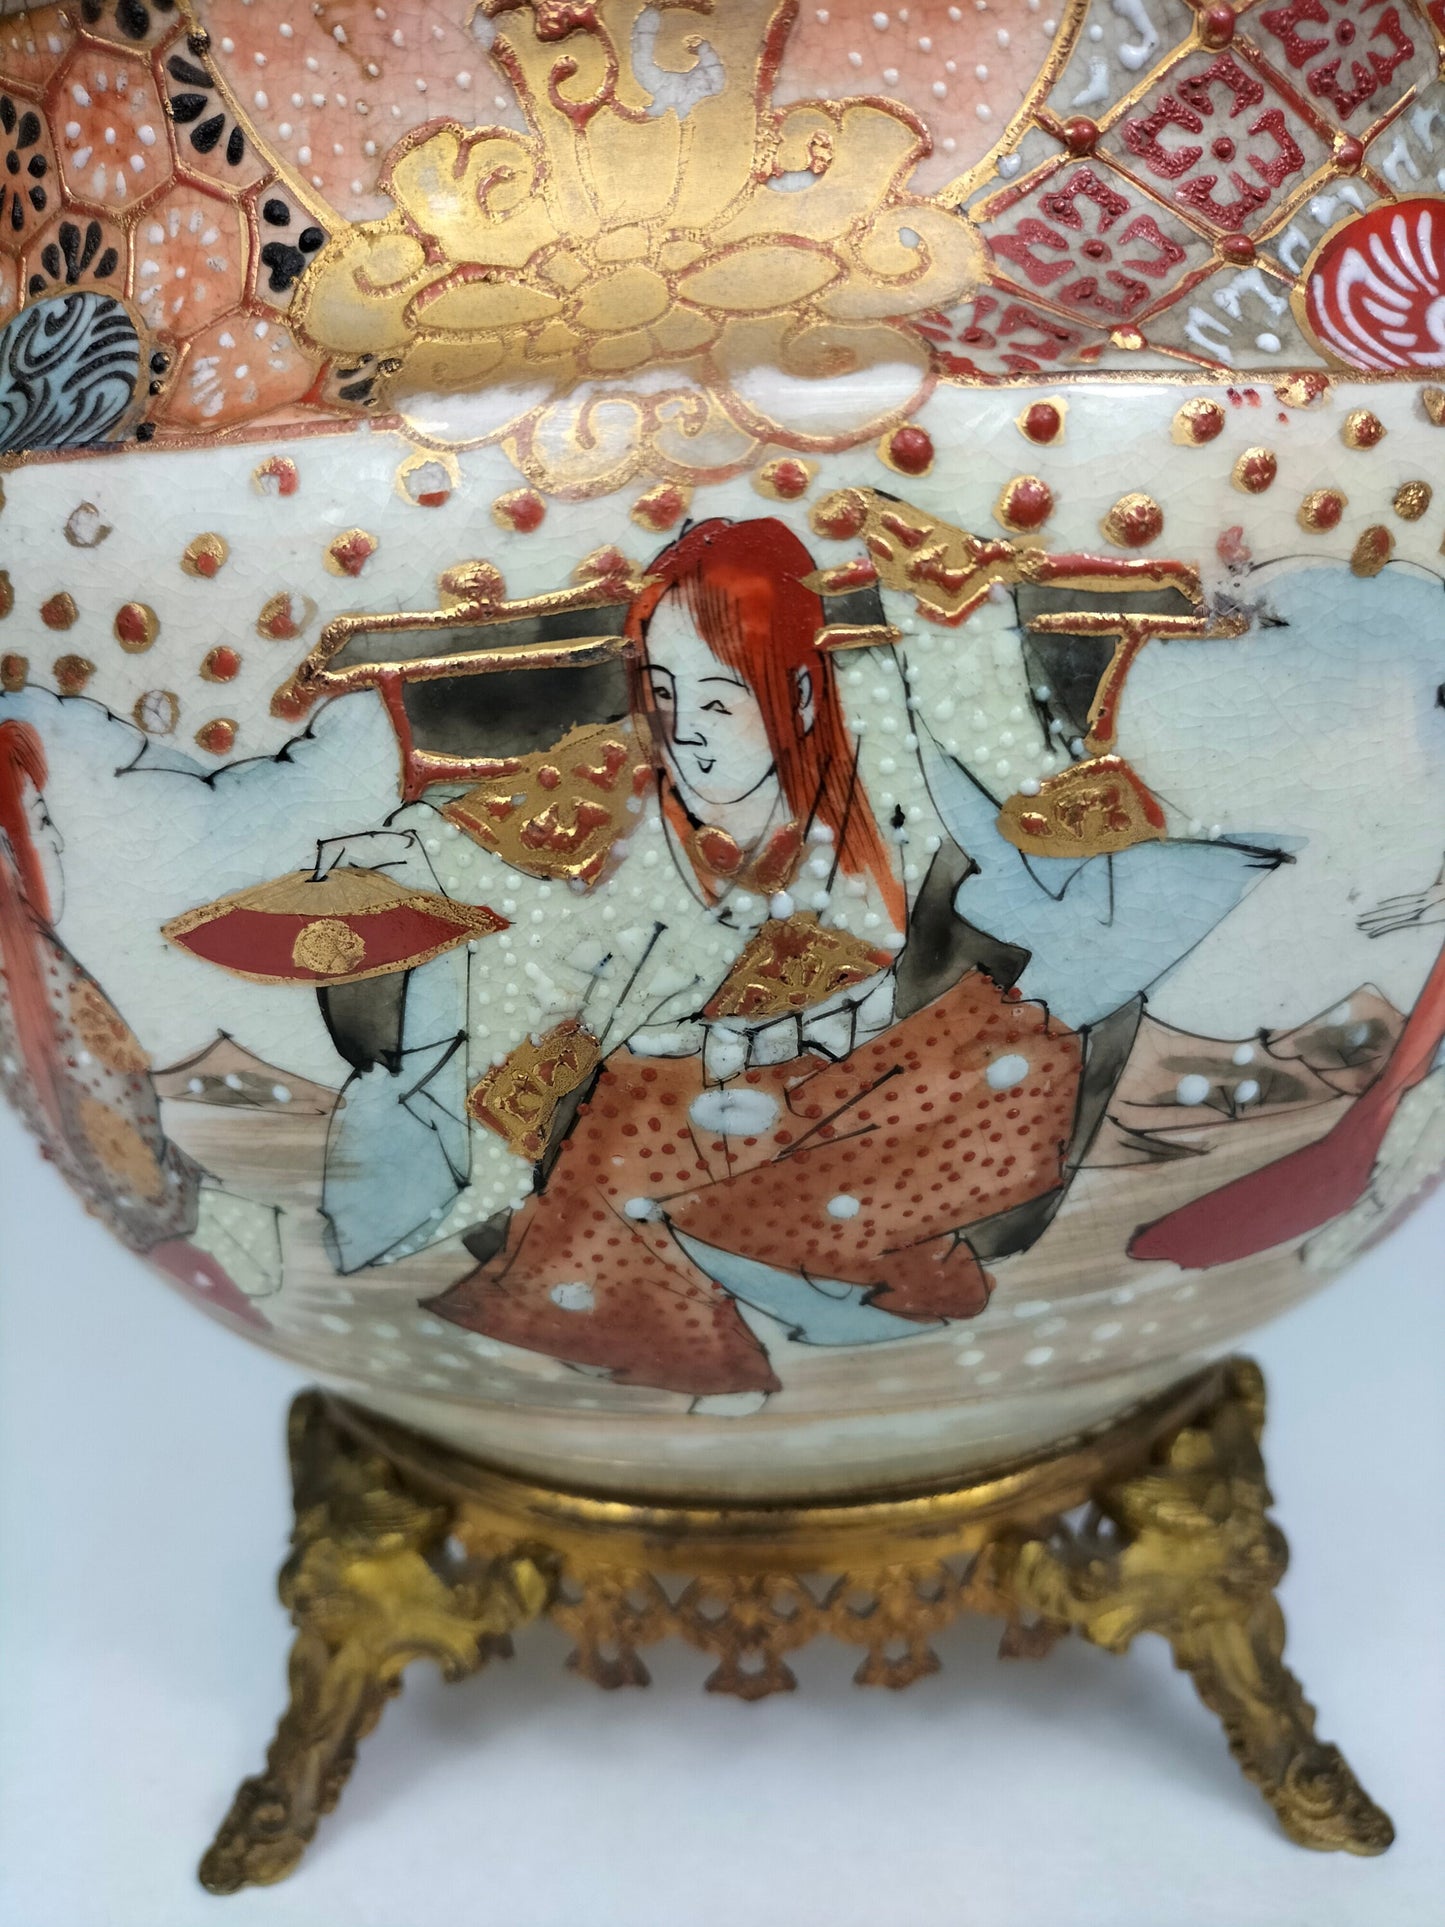 Antique Japanese satsuma vase mounted with gilded brass // Meijji Period - 19th century